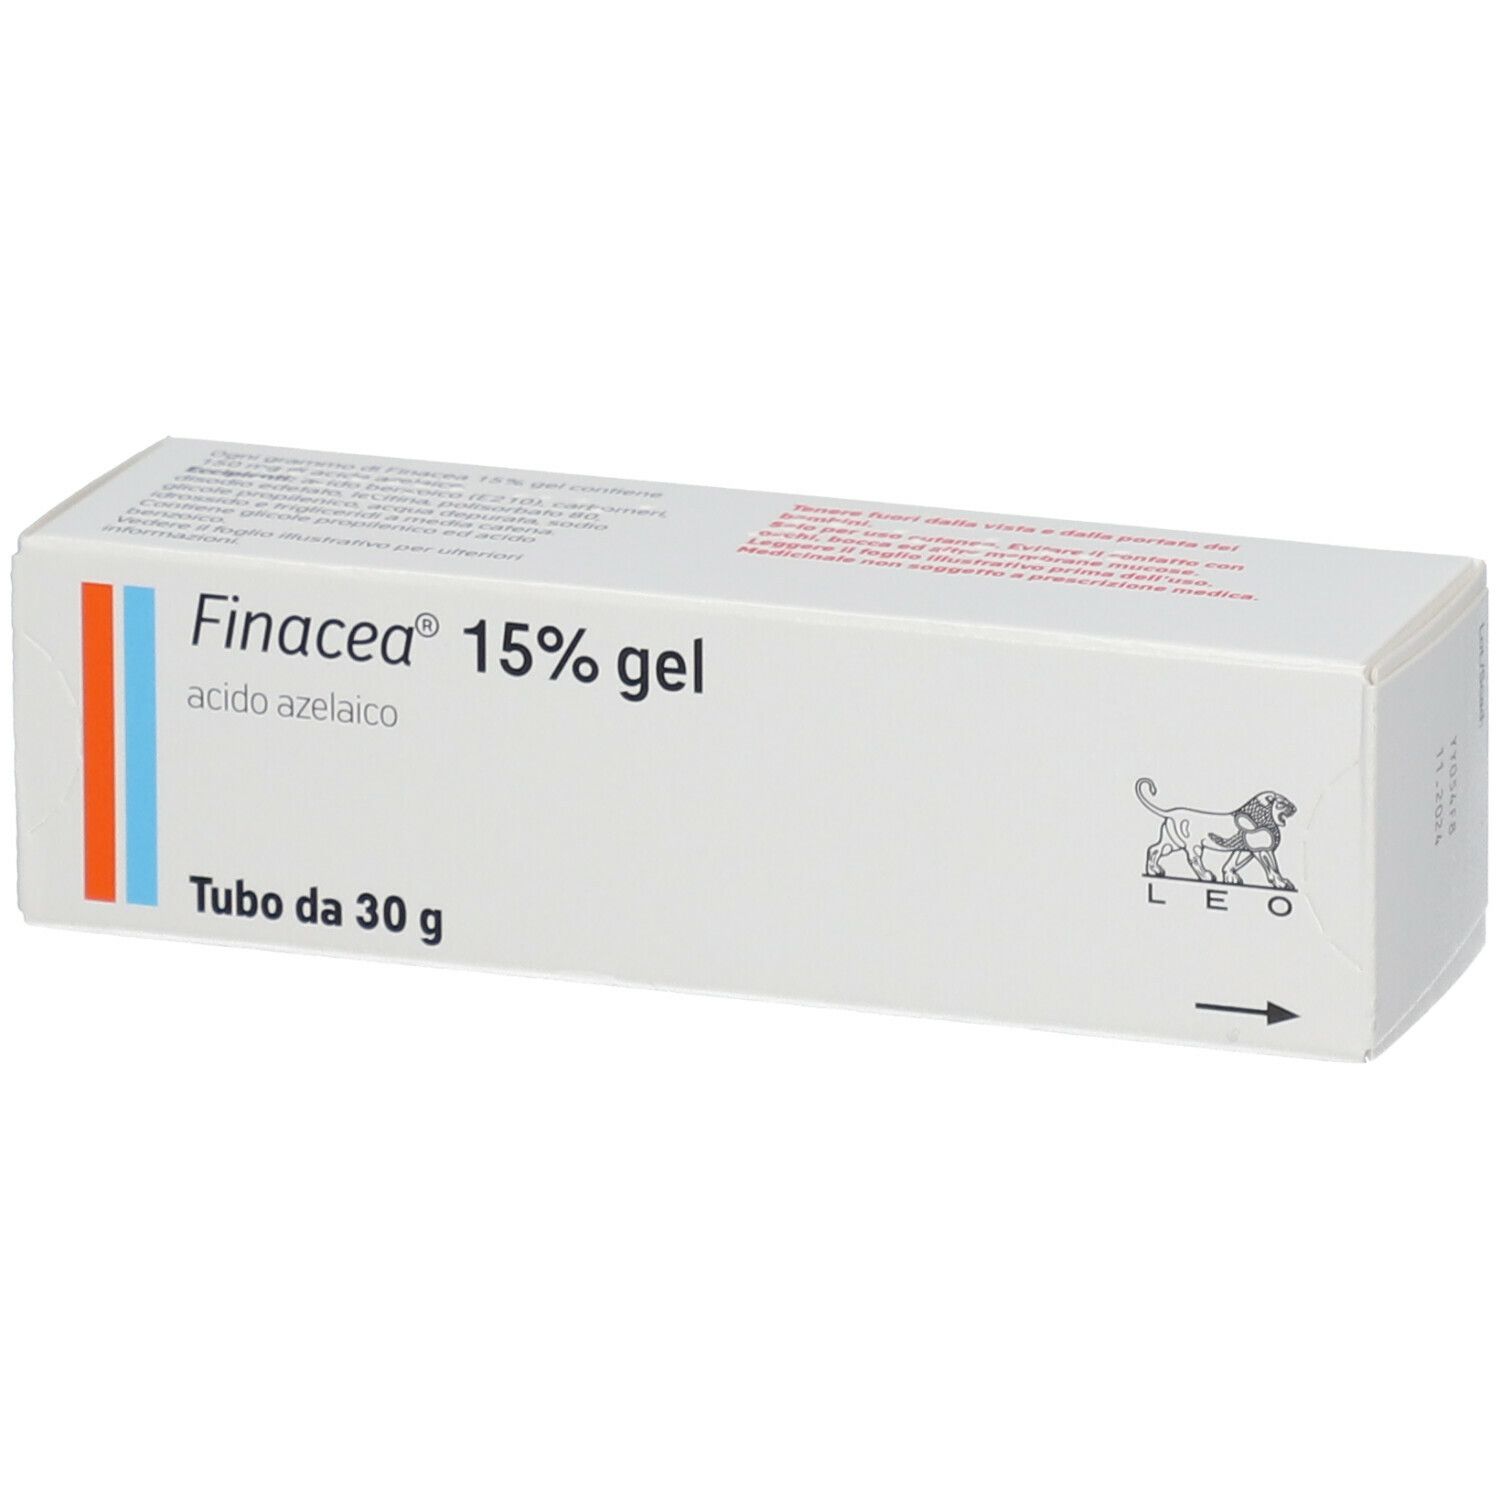 Image of Finacea® 15% Gel Acido Azelaico